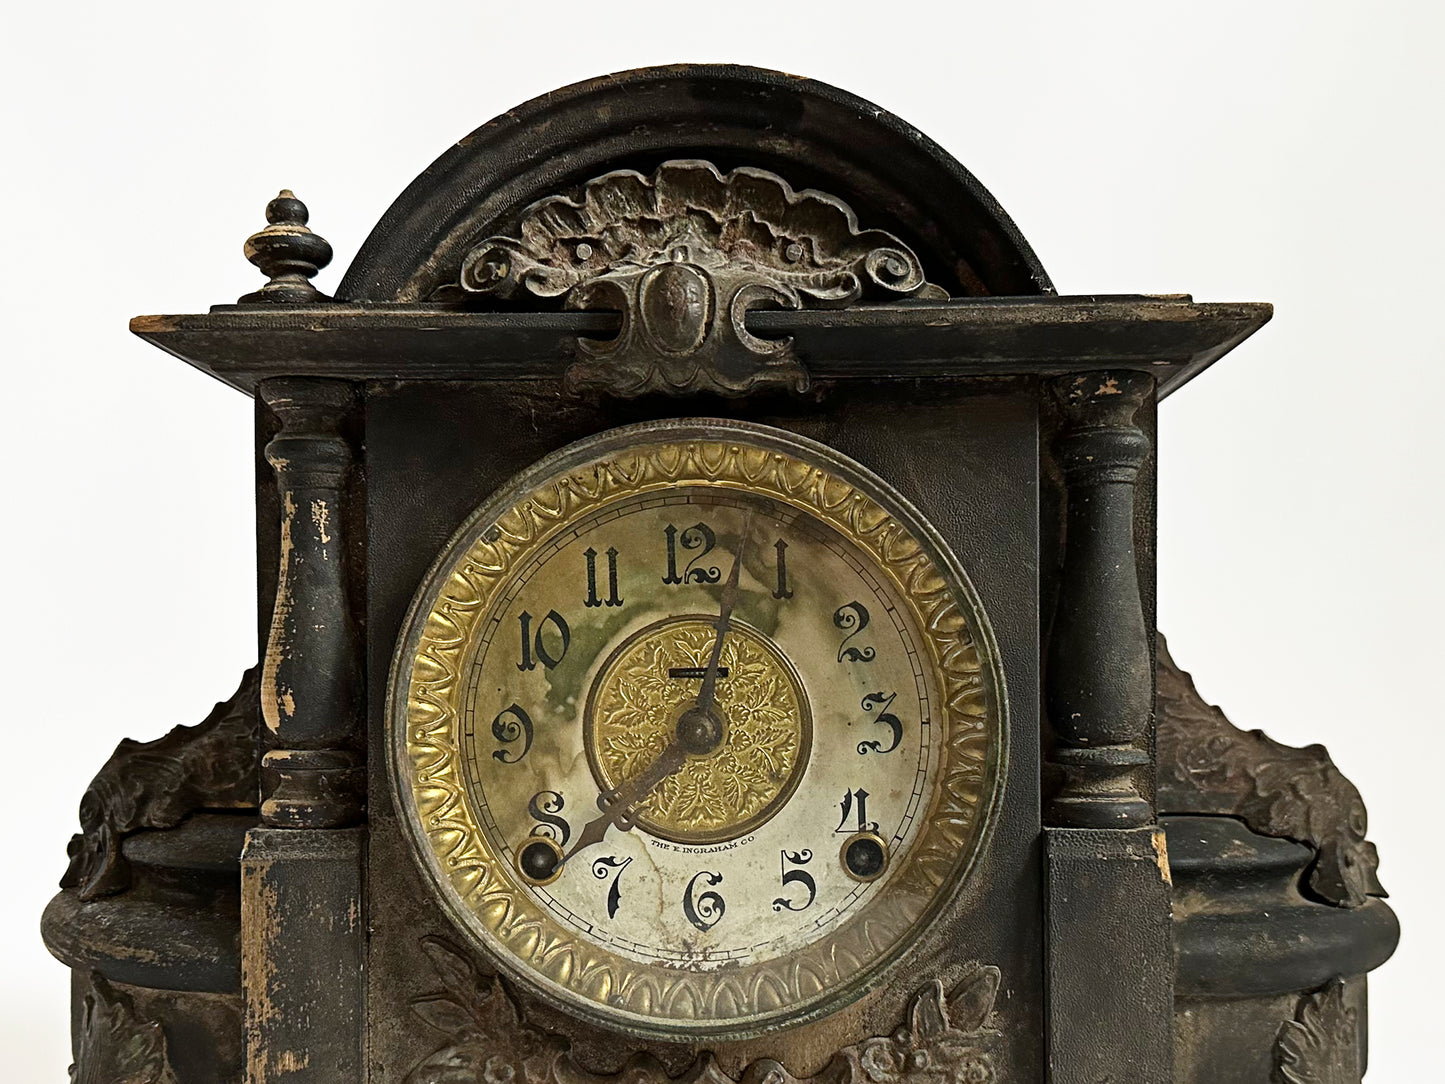 Antique Mantle Clock, The E. Ingraham Company, Antique Victorian Decor